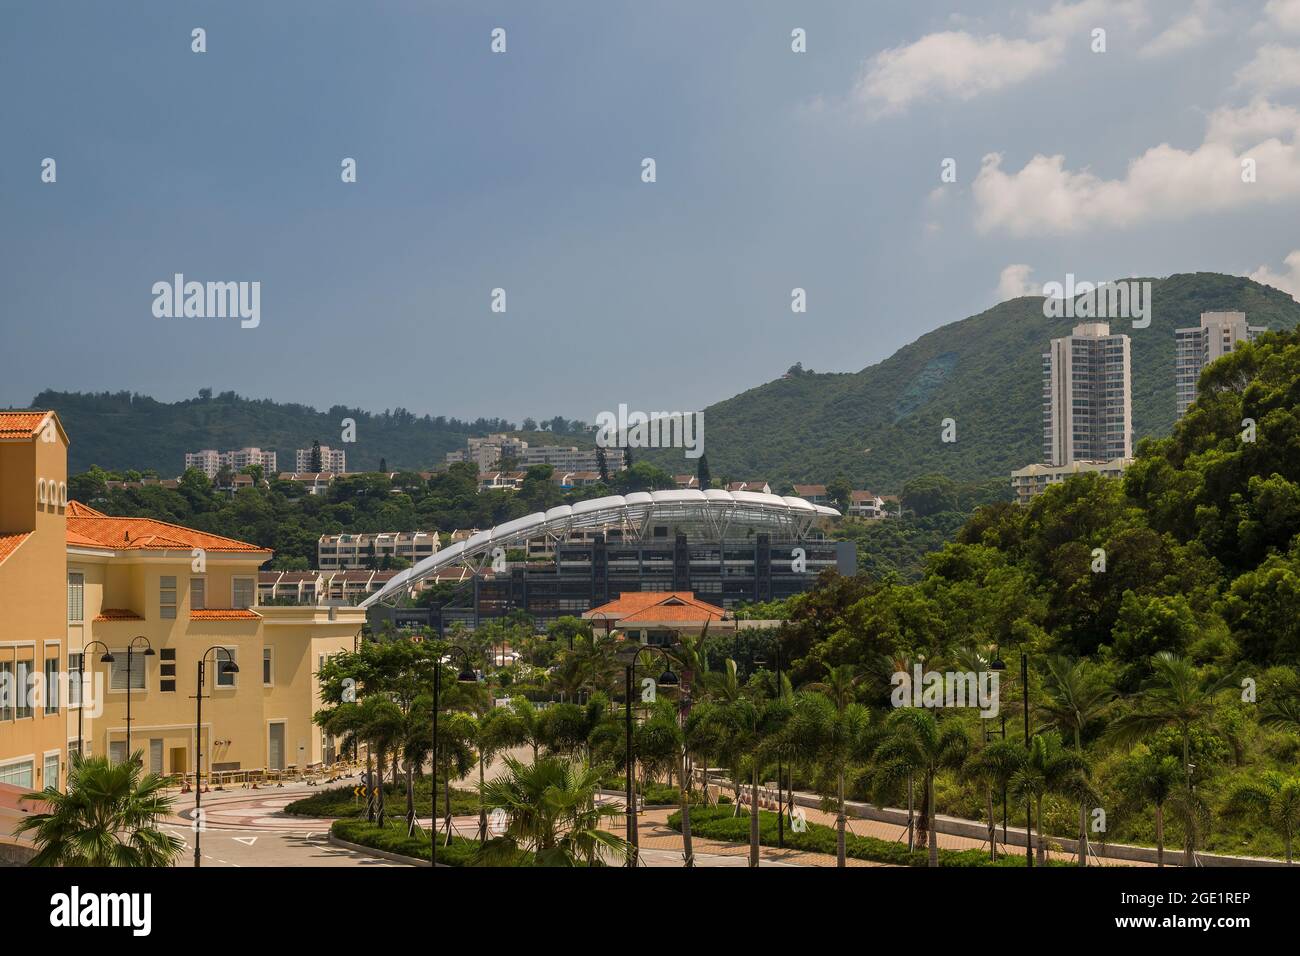 Il tetto caratteristico del Discovery College, Discovery Bay, Lantau Island, Hong Kong (2011) Foto Stock